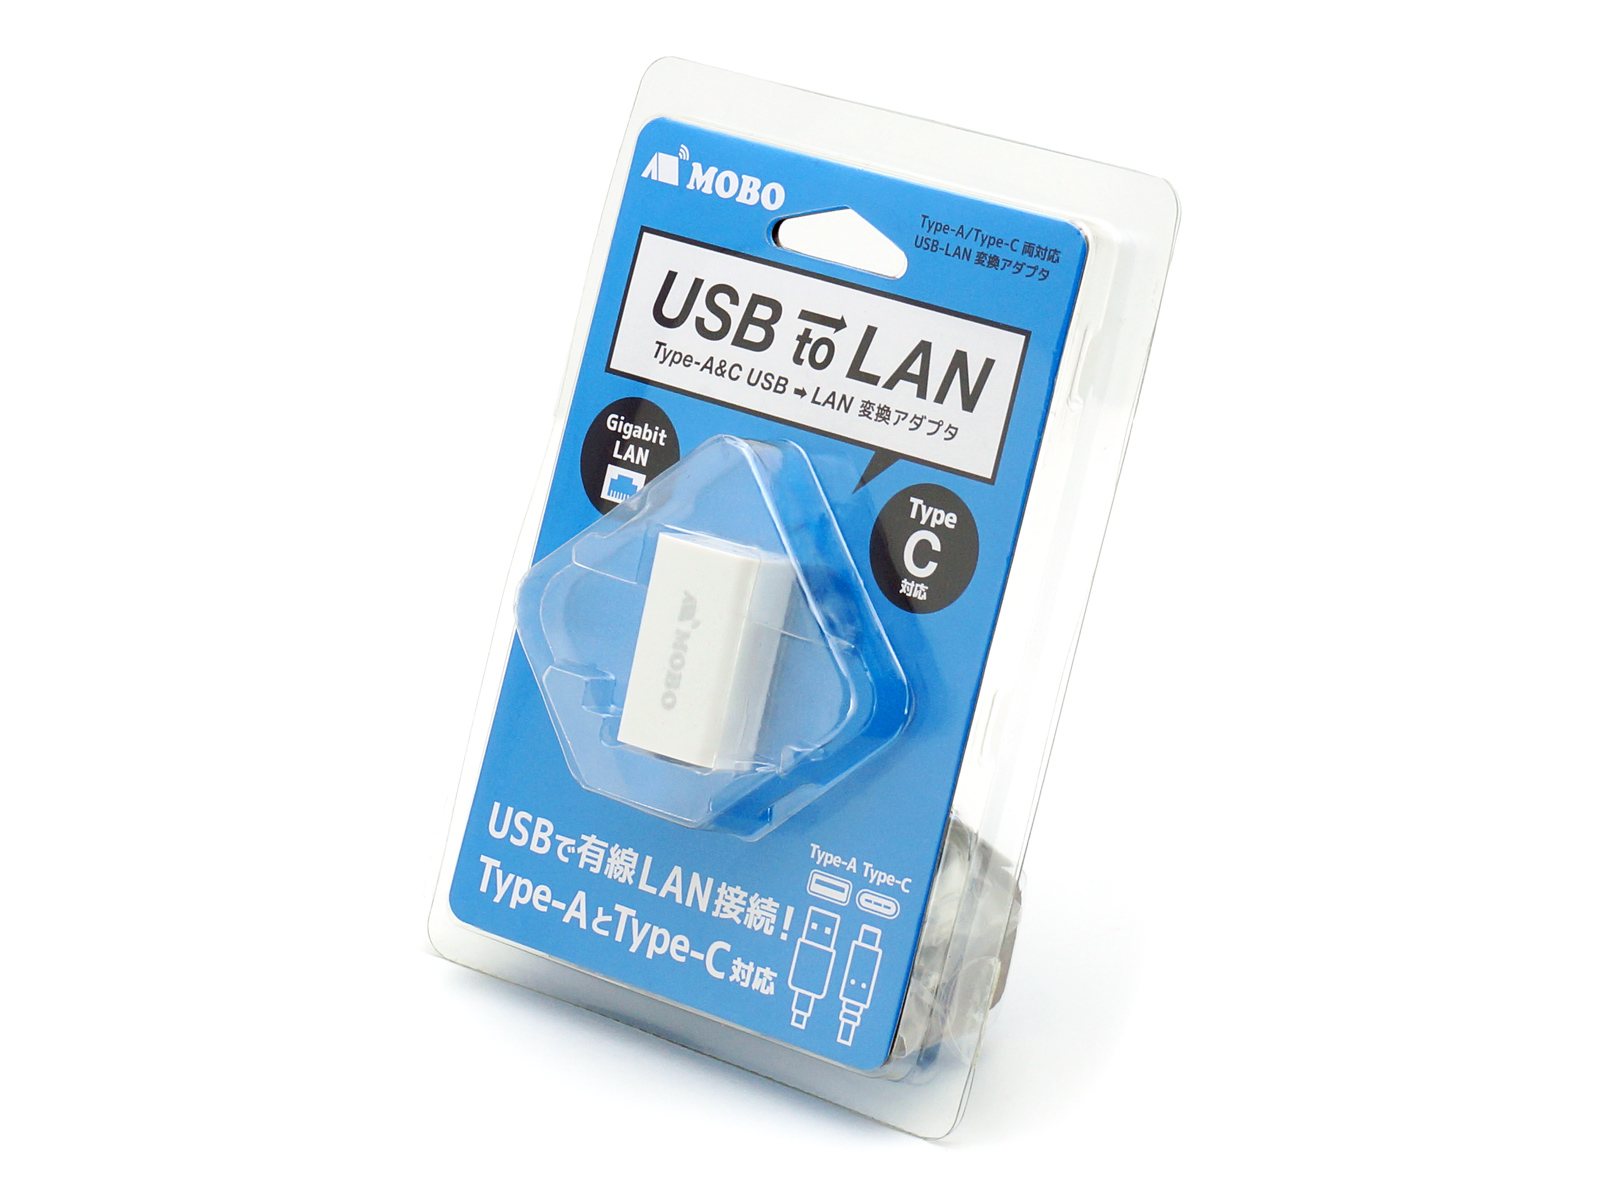 USBtoLAN-03